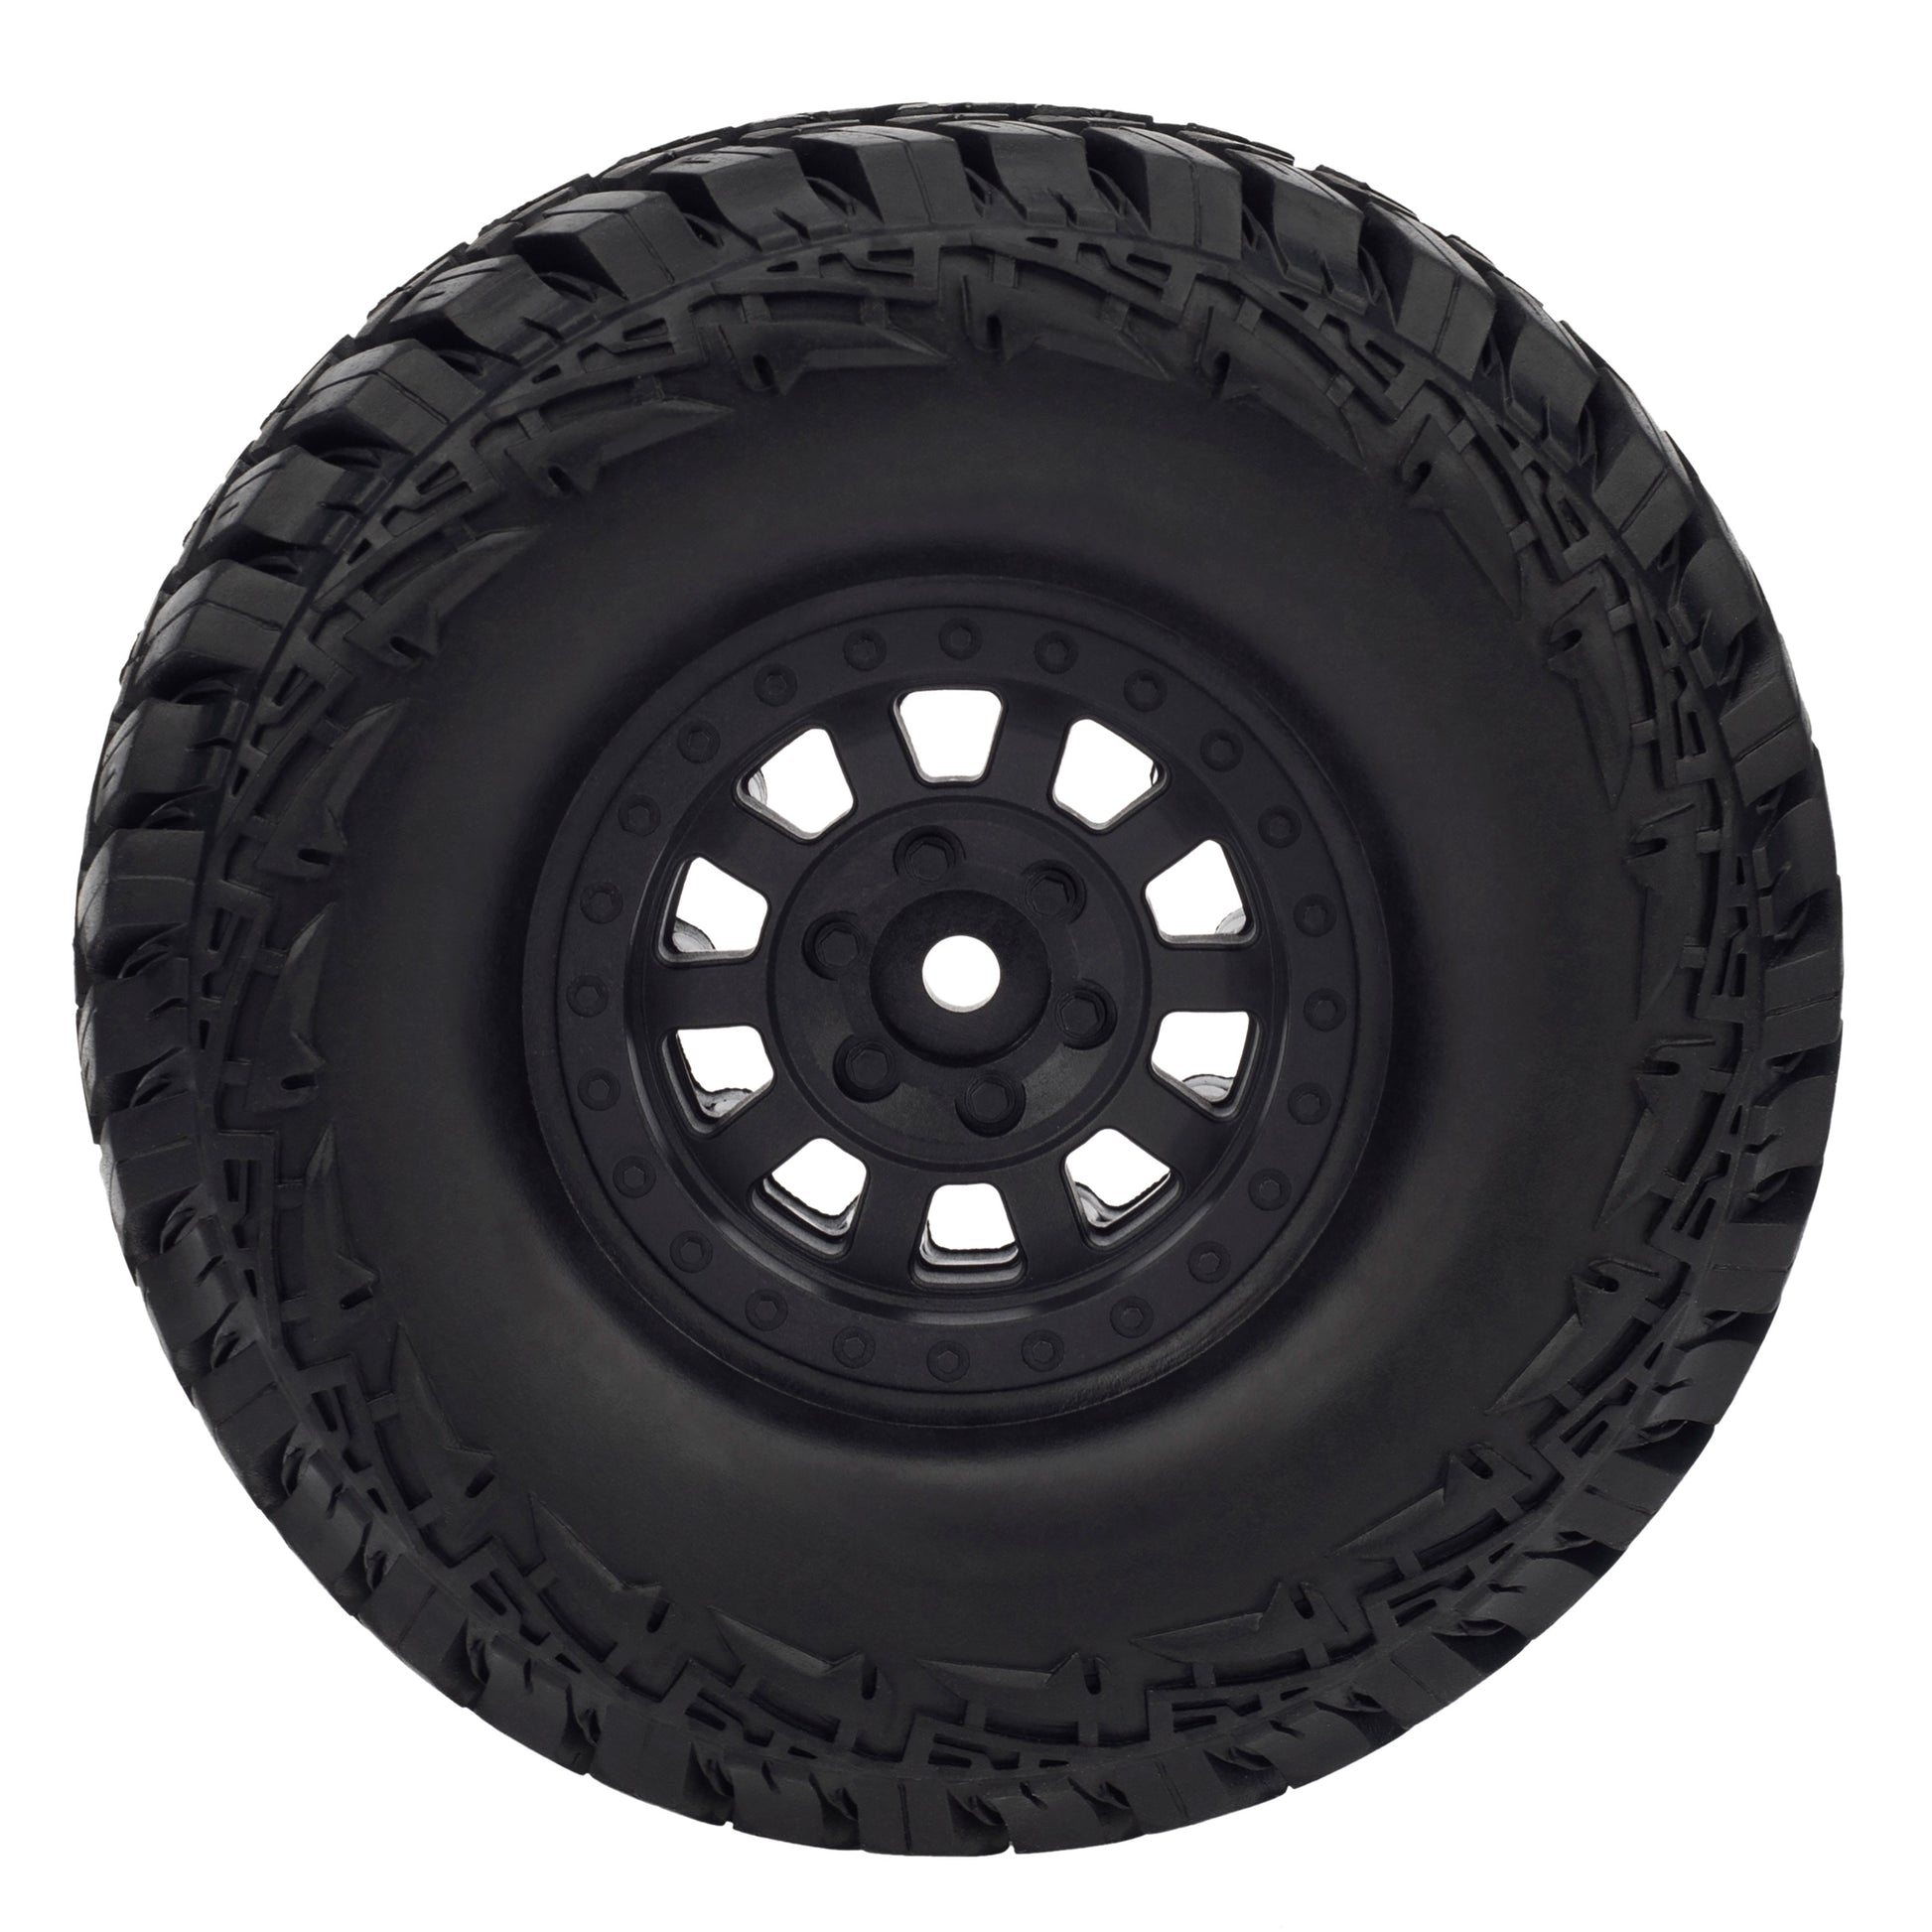 Black 1.9" Plastic Beadlock Wheels/Rubber Tires